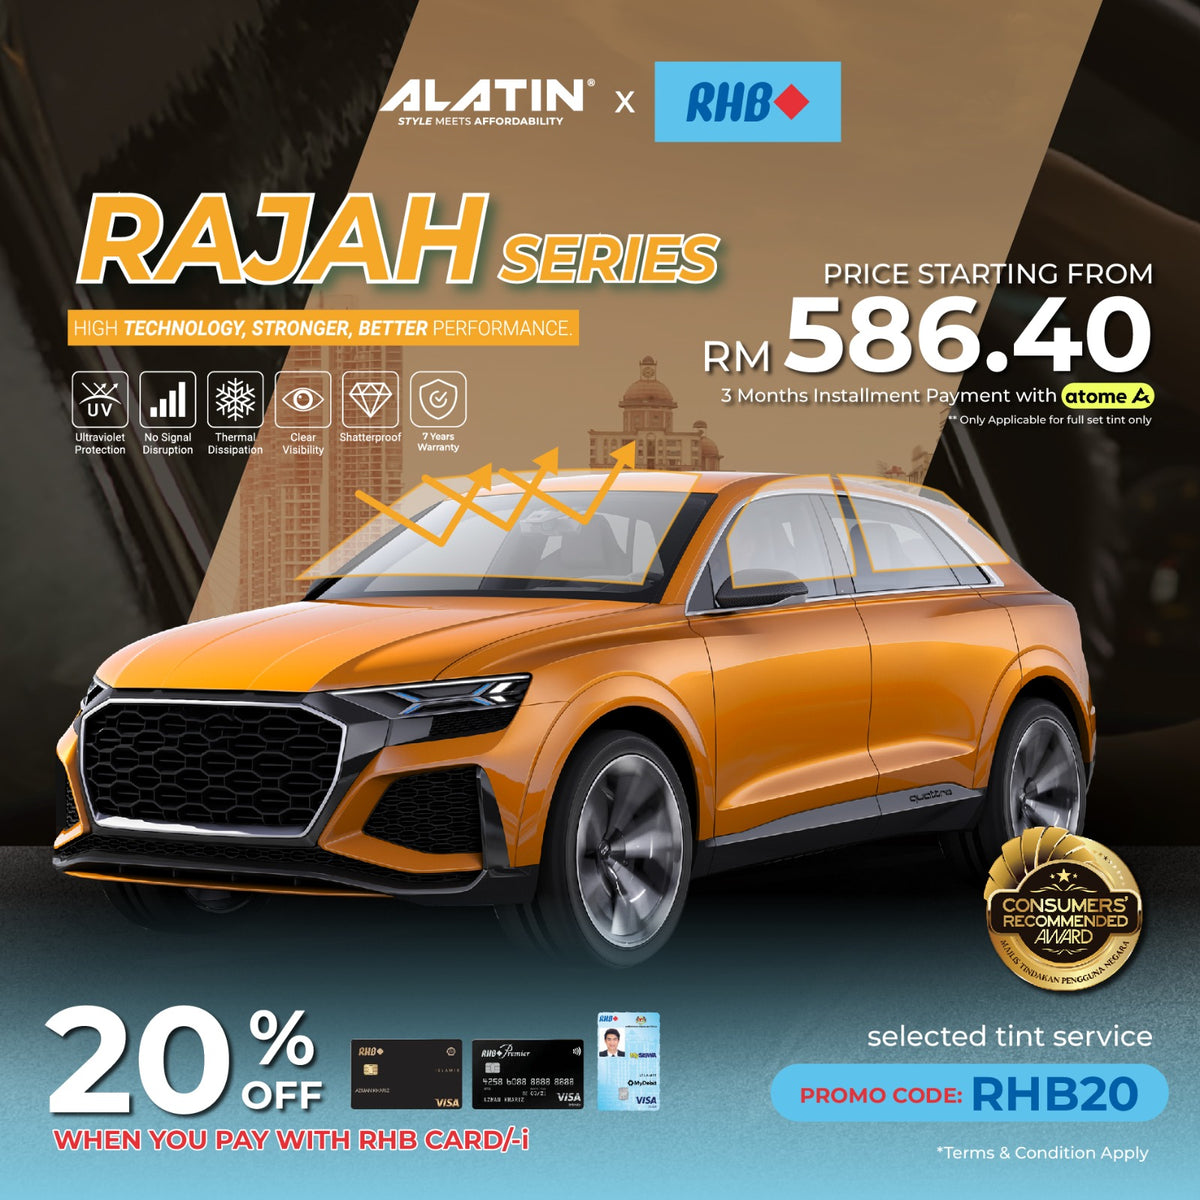 RAJAH Series for Saloon/SUV